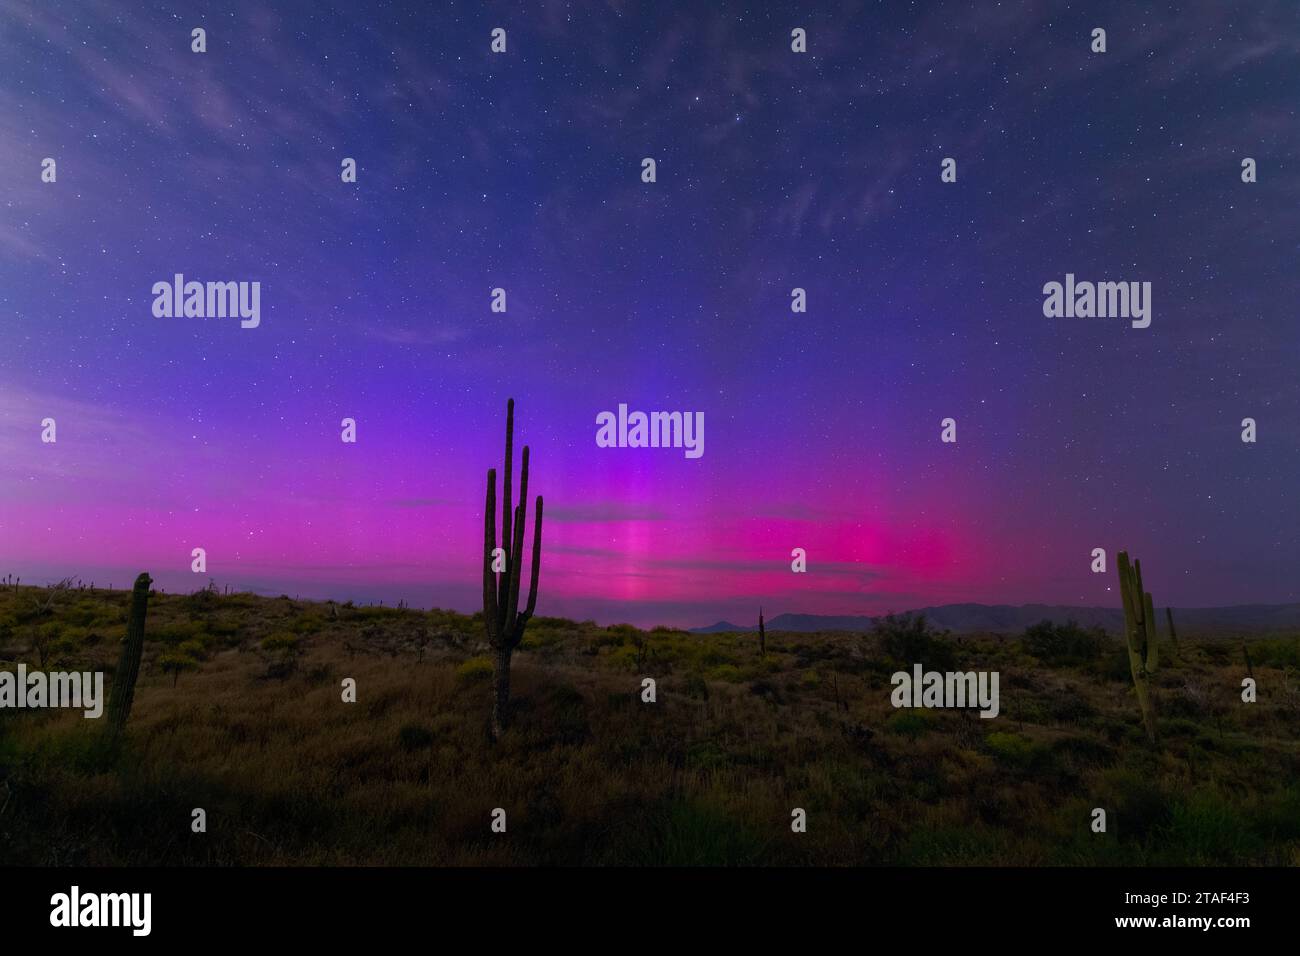 Rare Aurora Borealis or northern lights in the night sky over the Sonoran Desert near Phoenix, Arizona Stock Photo